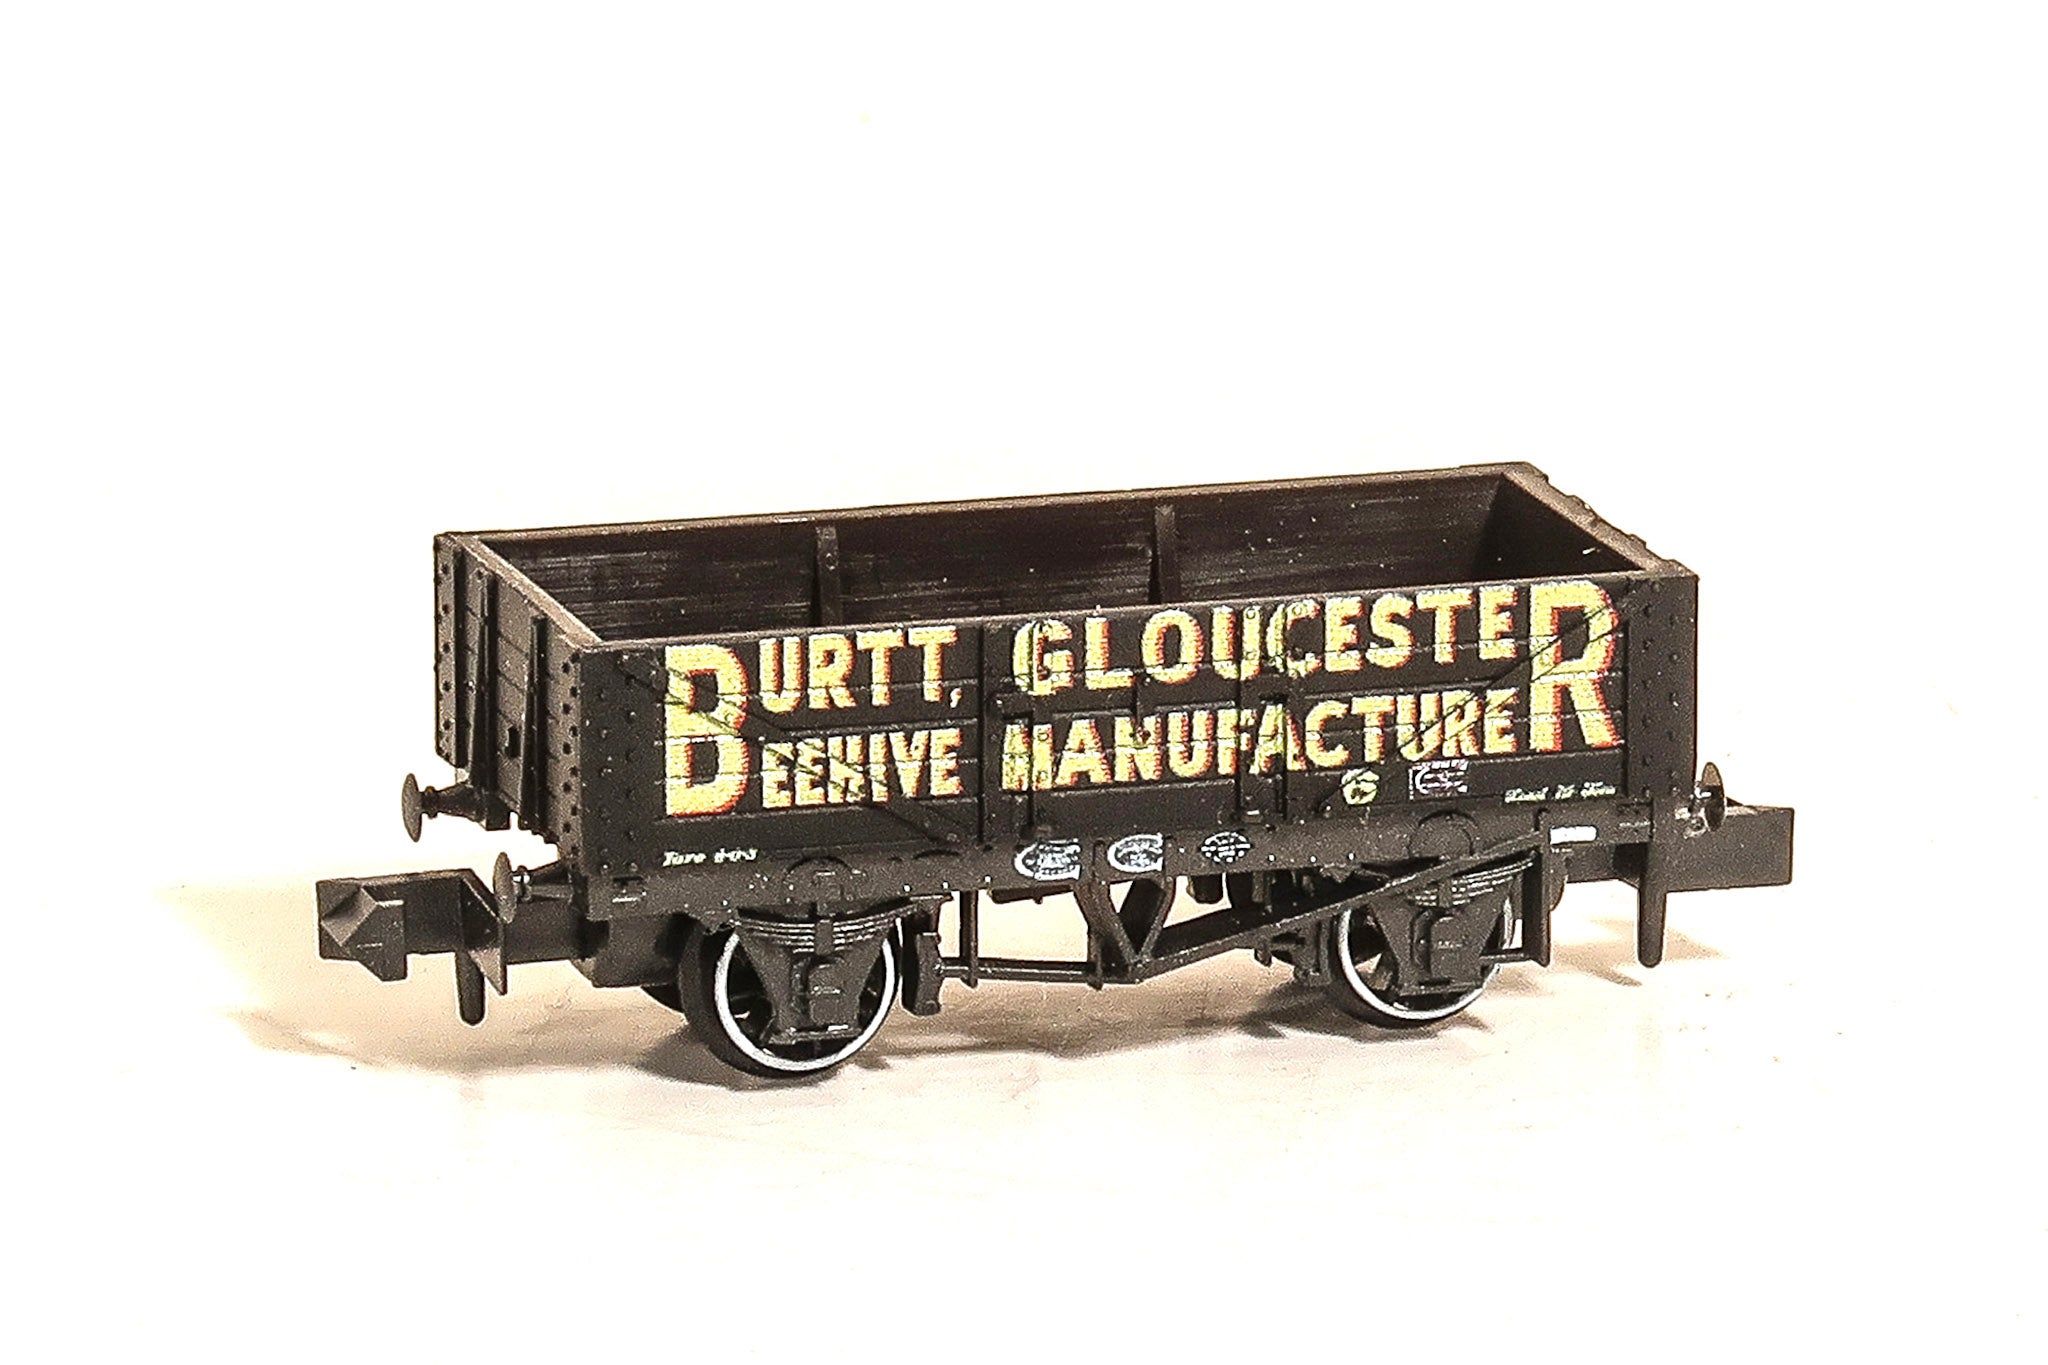 5 Plank, Burtt Gloucester Beehive Manufacturer, Nr. 6